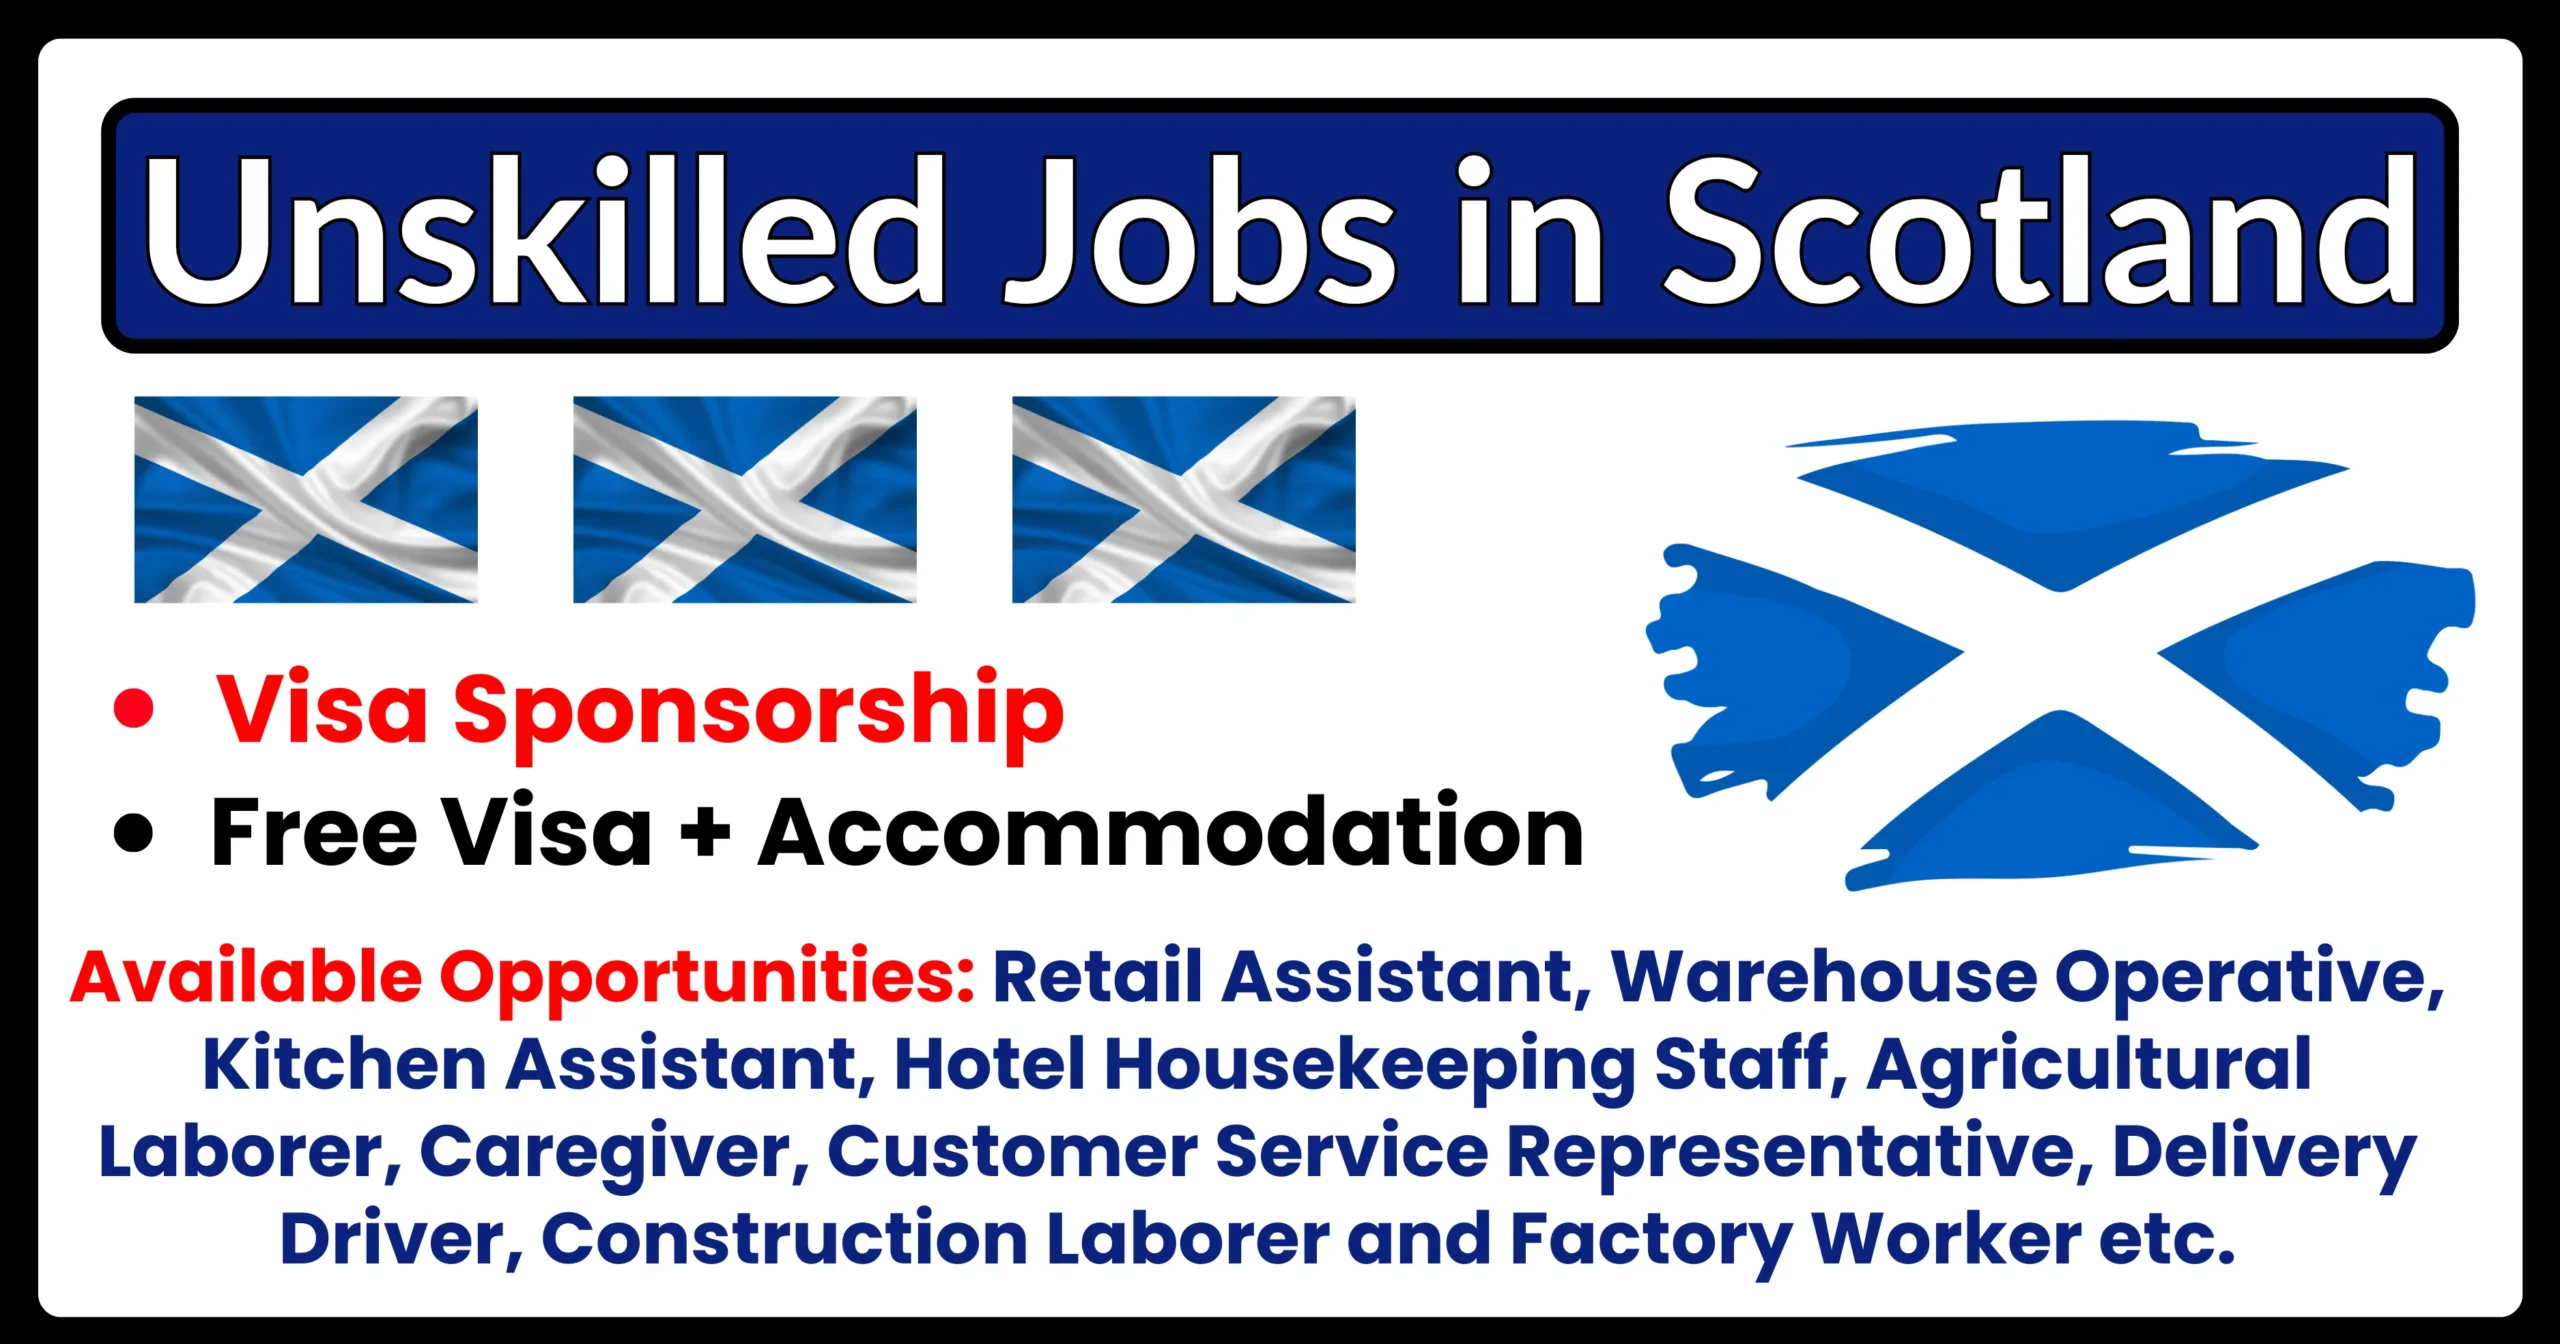 Unskilled Jobs in Scotland with Visa Sponsorship